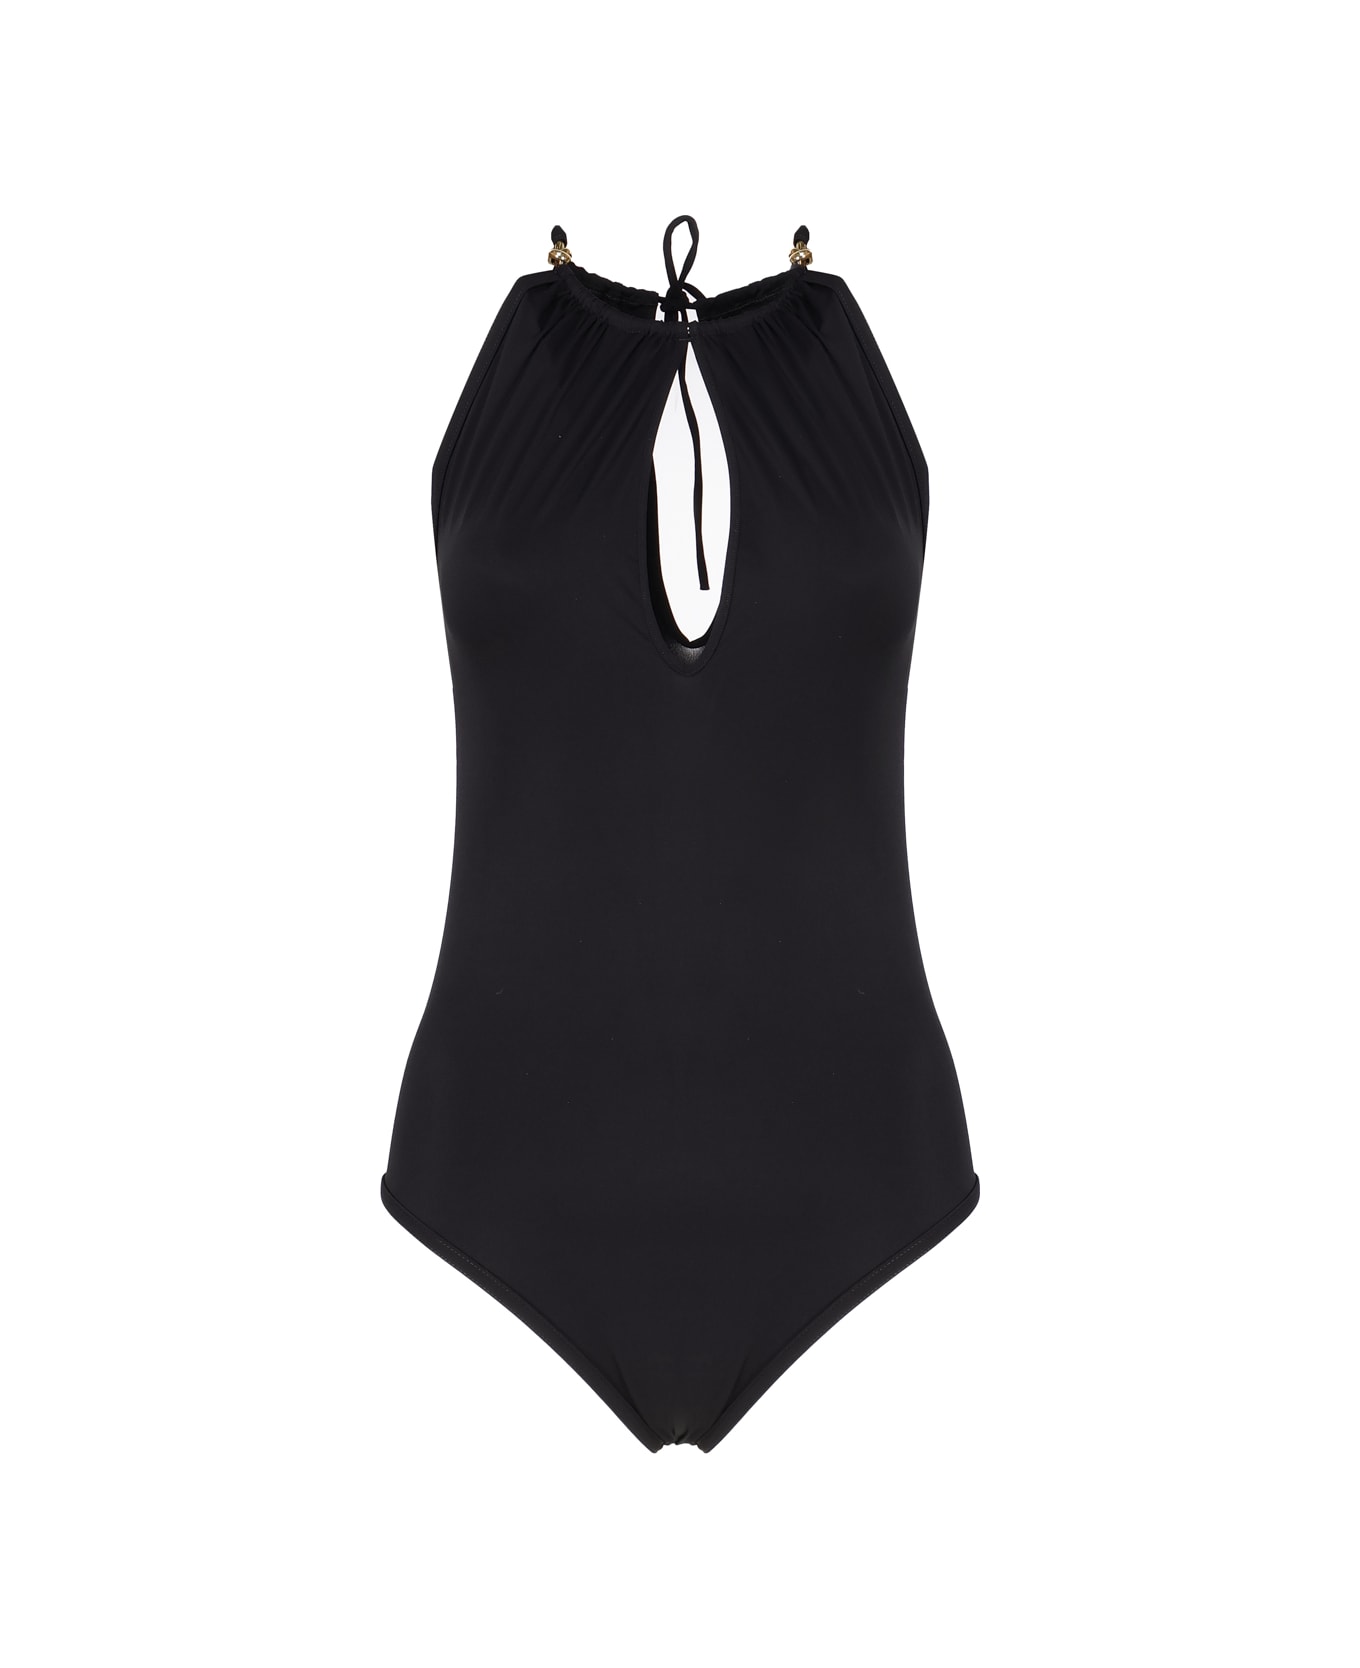 Bottega Veneta Knot One-piece Swimsuit - Black